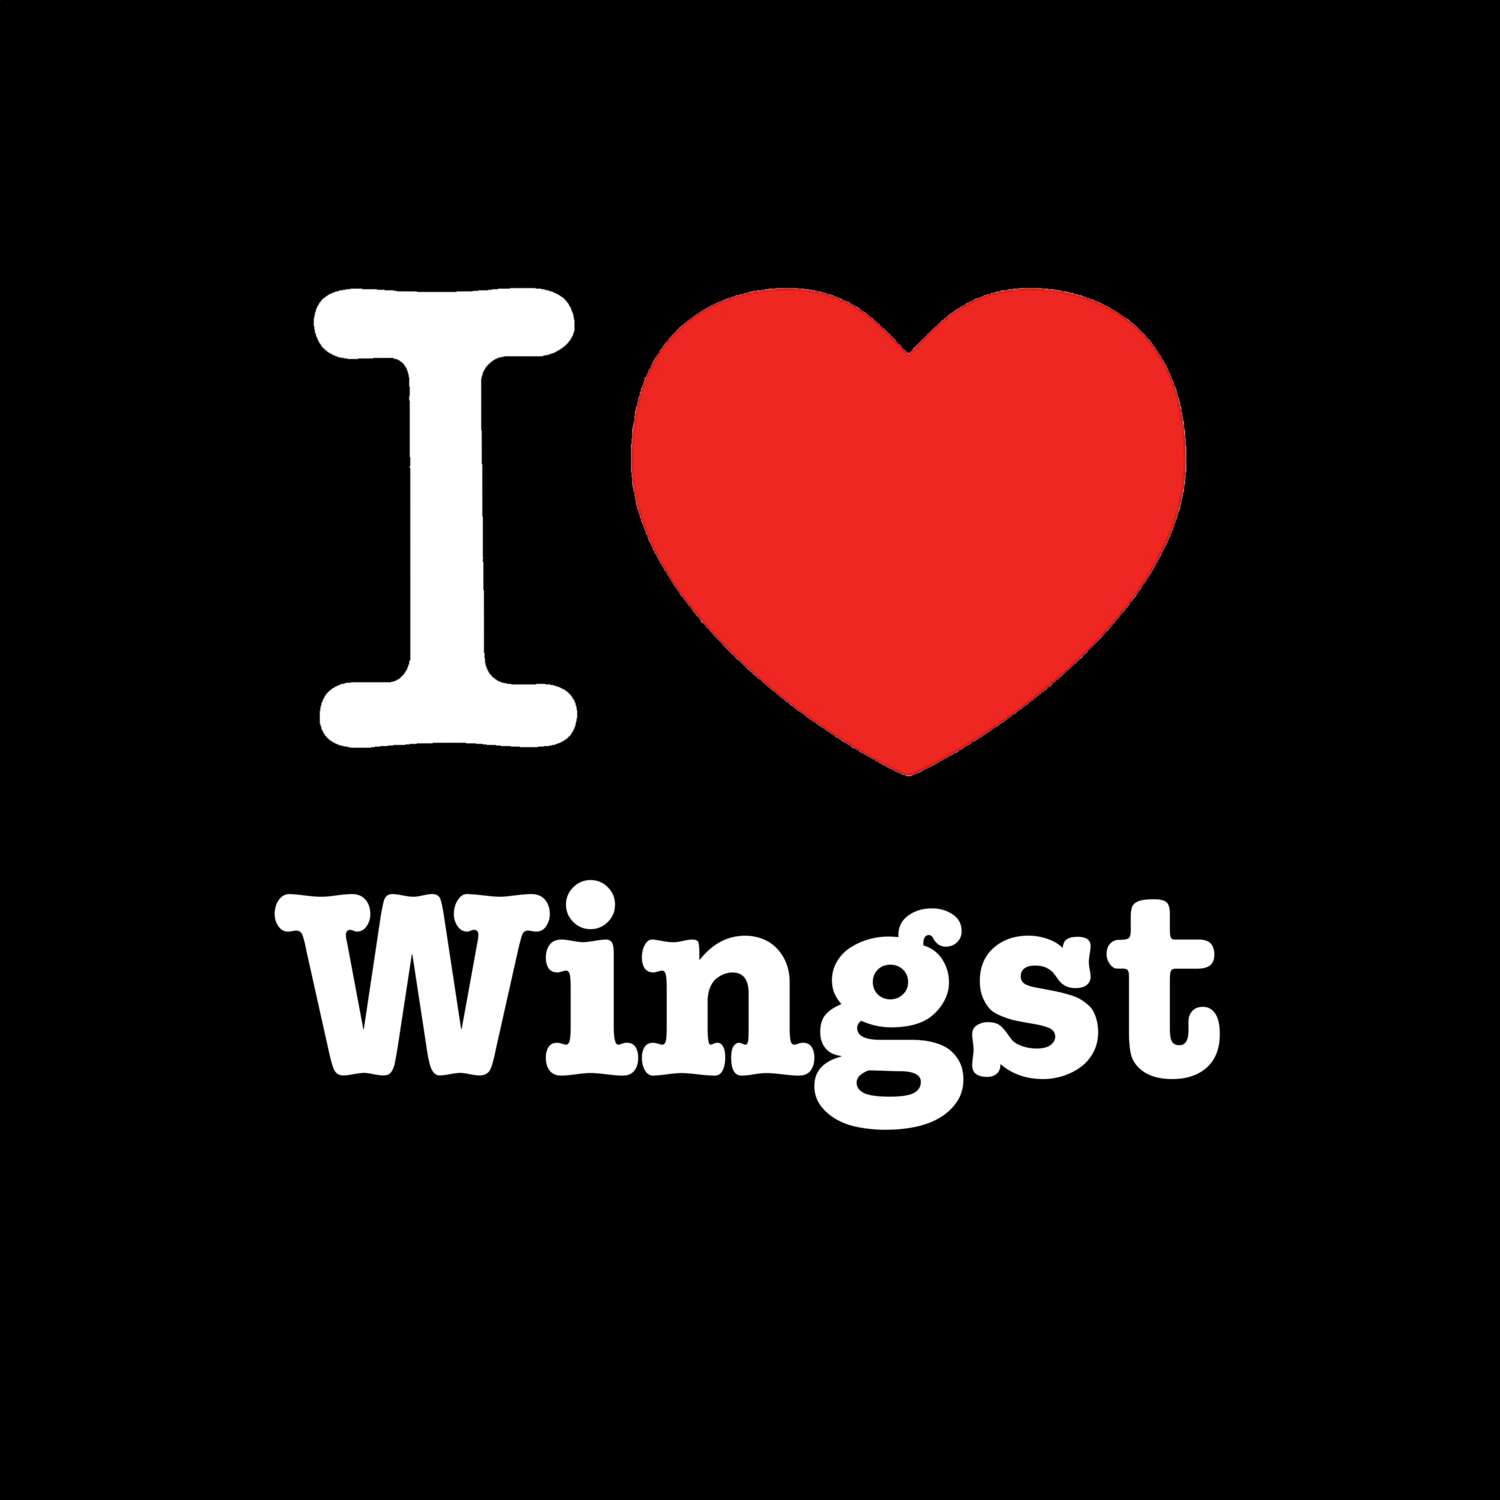 Wingst T-Shirt »I love«